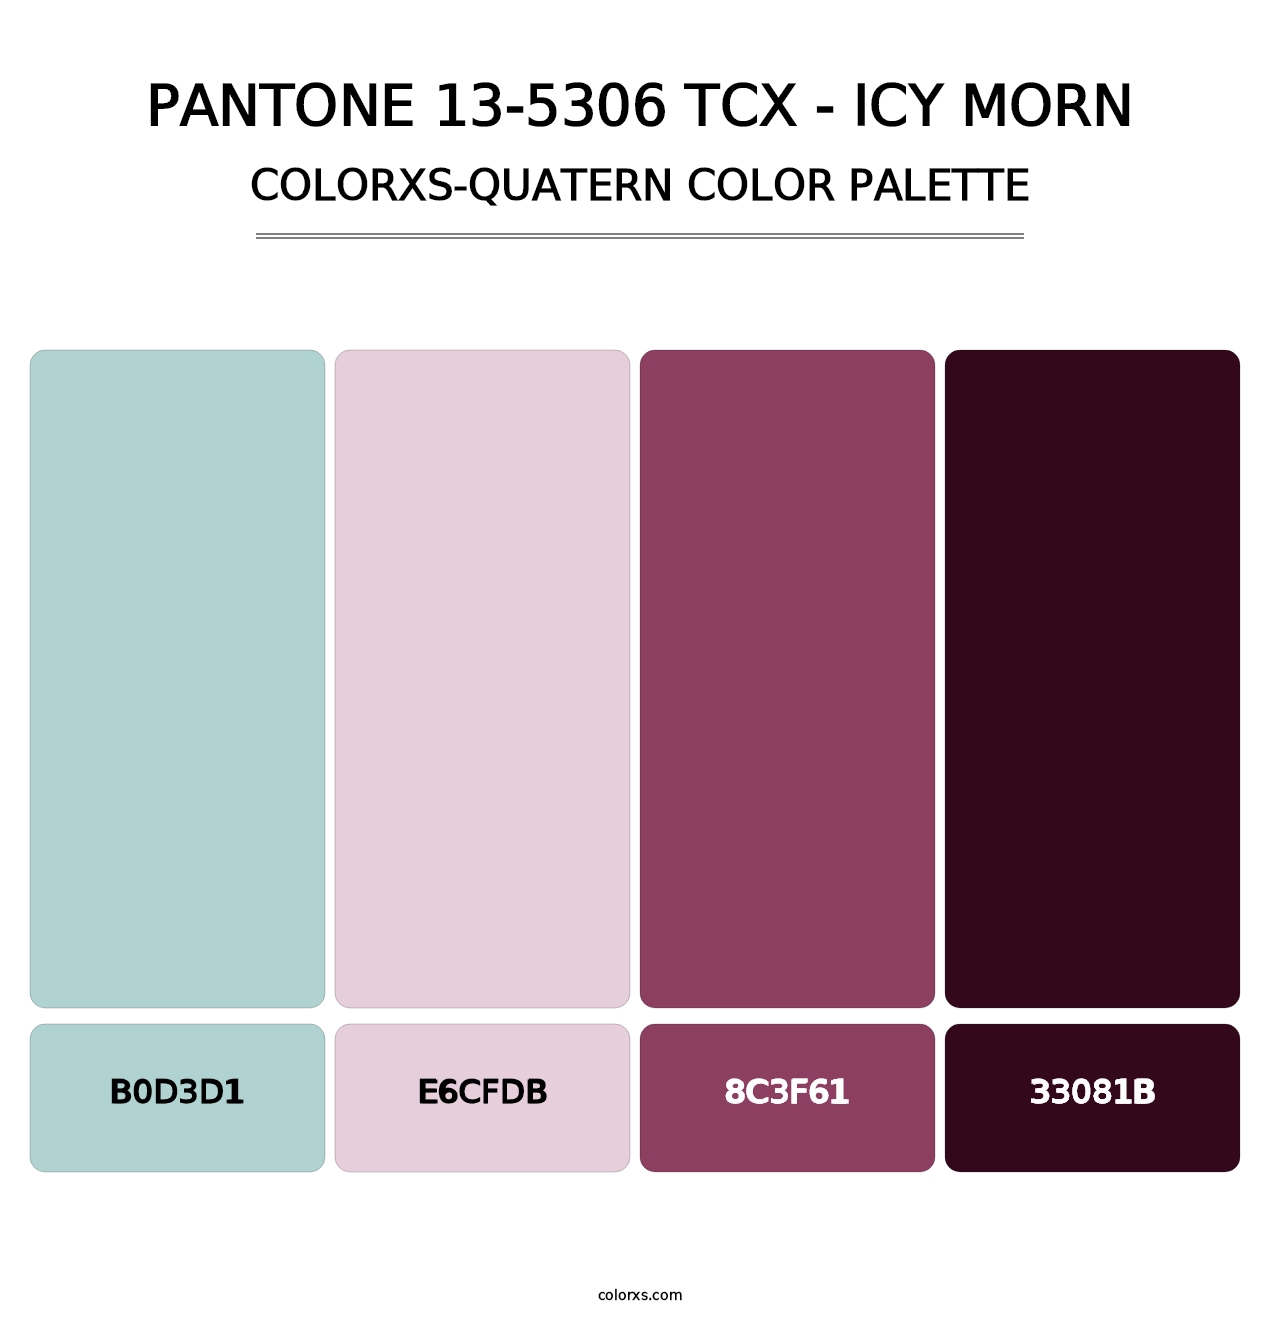 PANTONE 13-5306 TCX - Icy Morn - Colorxs Quatern Palette